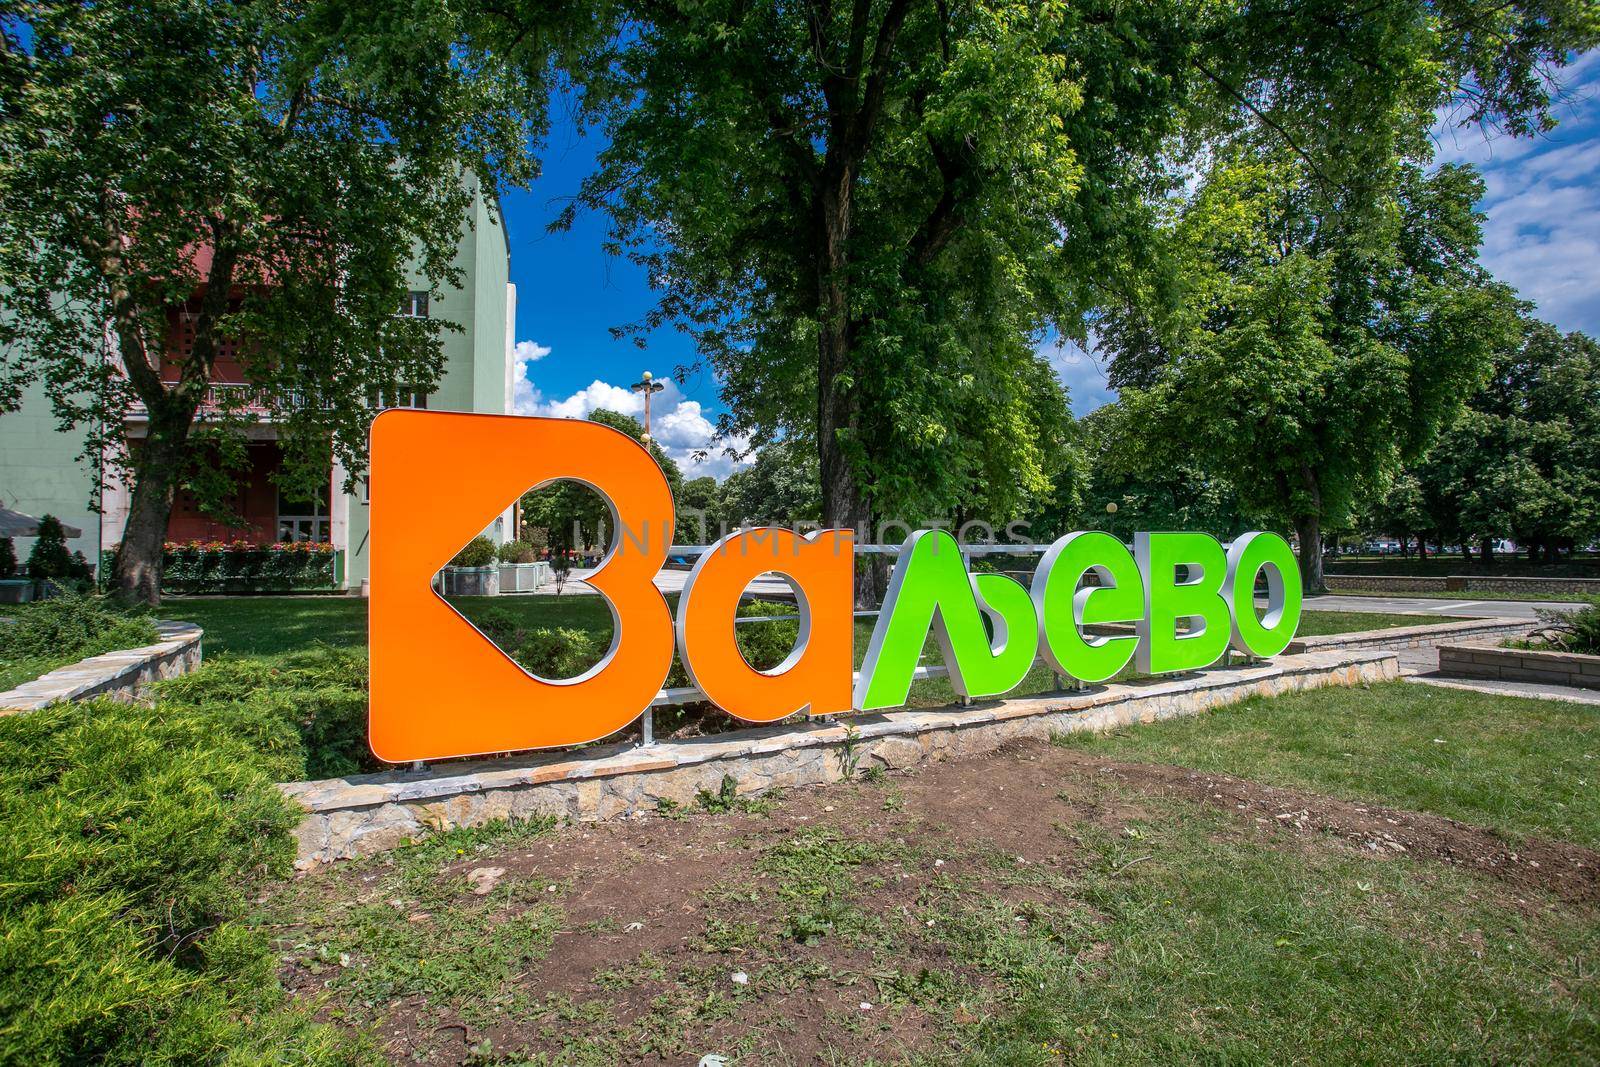 Valjevo, Serbia - June 26, 2022: Valjevo - inscription with the name of the city in Cyrillic in the center of the city